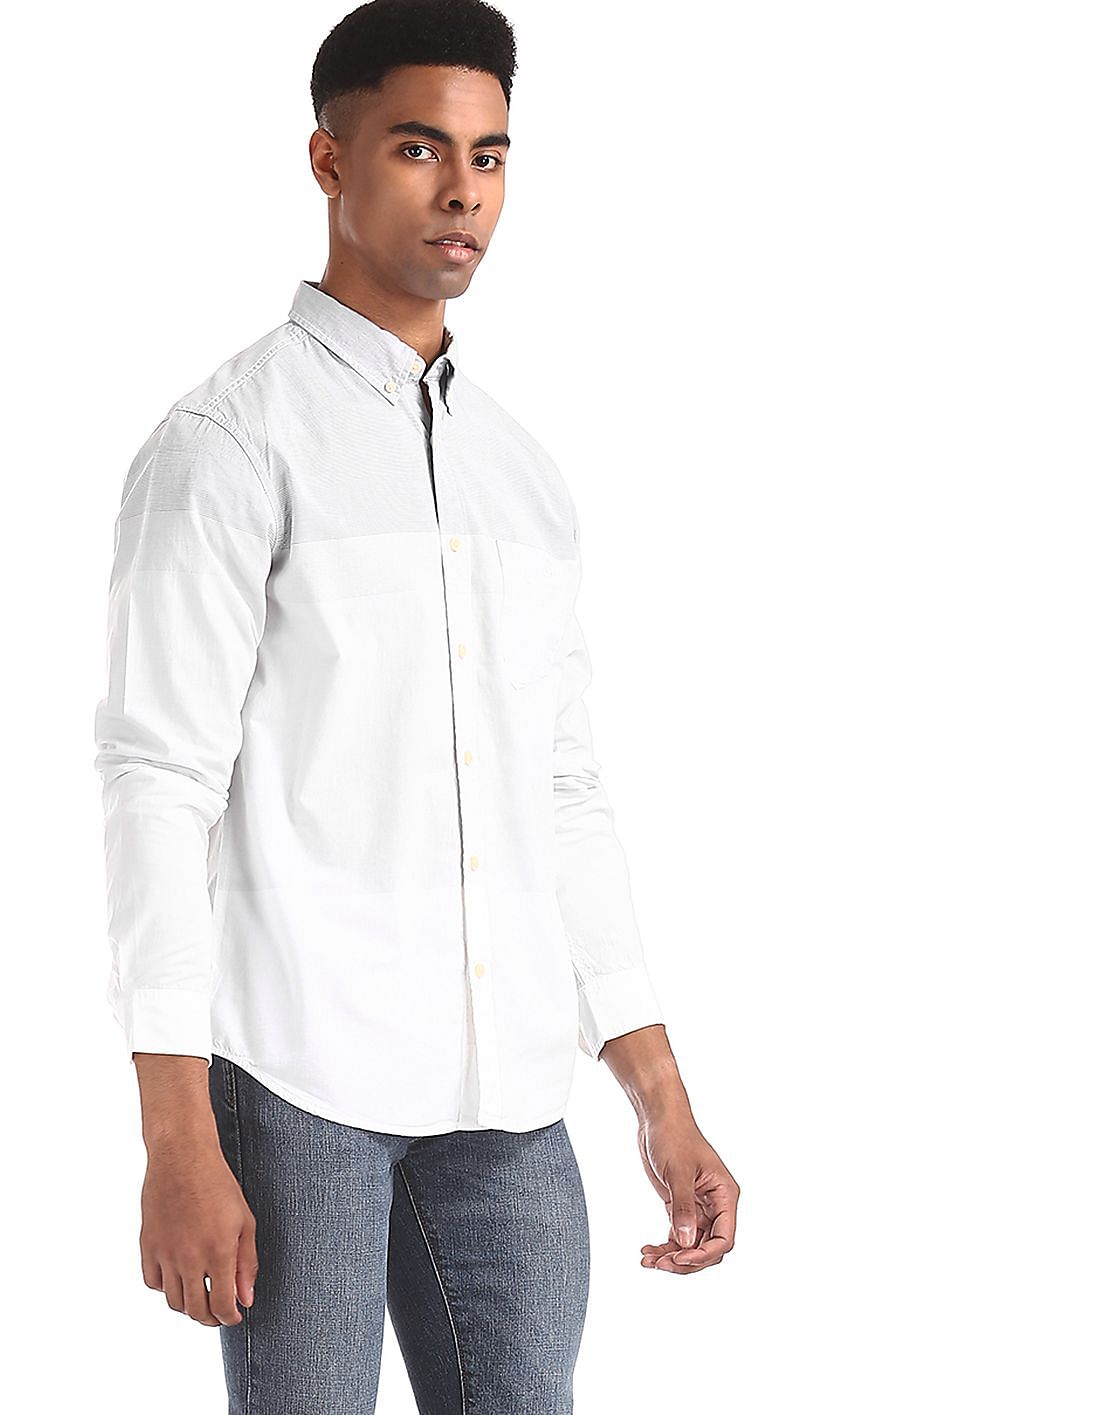 Buy Aeropostale Grey and White Patch Pocket Striped Shirt - NNNOW.com